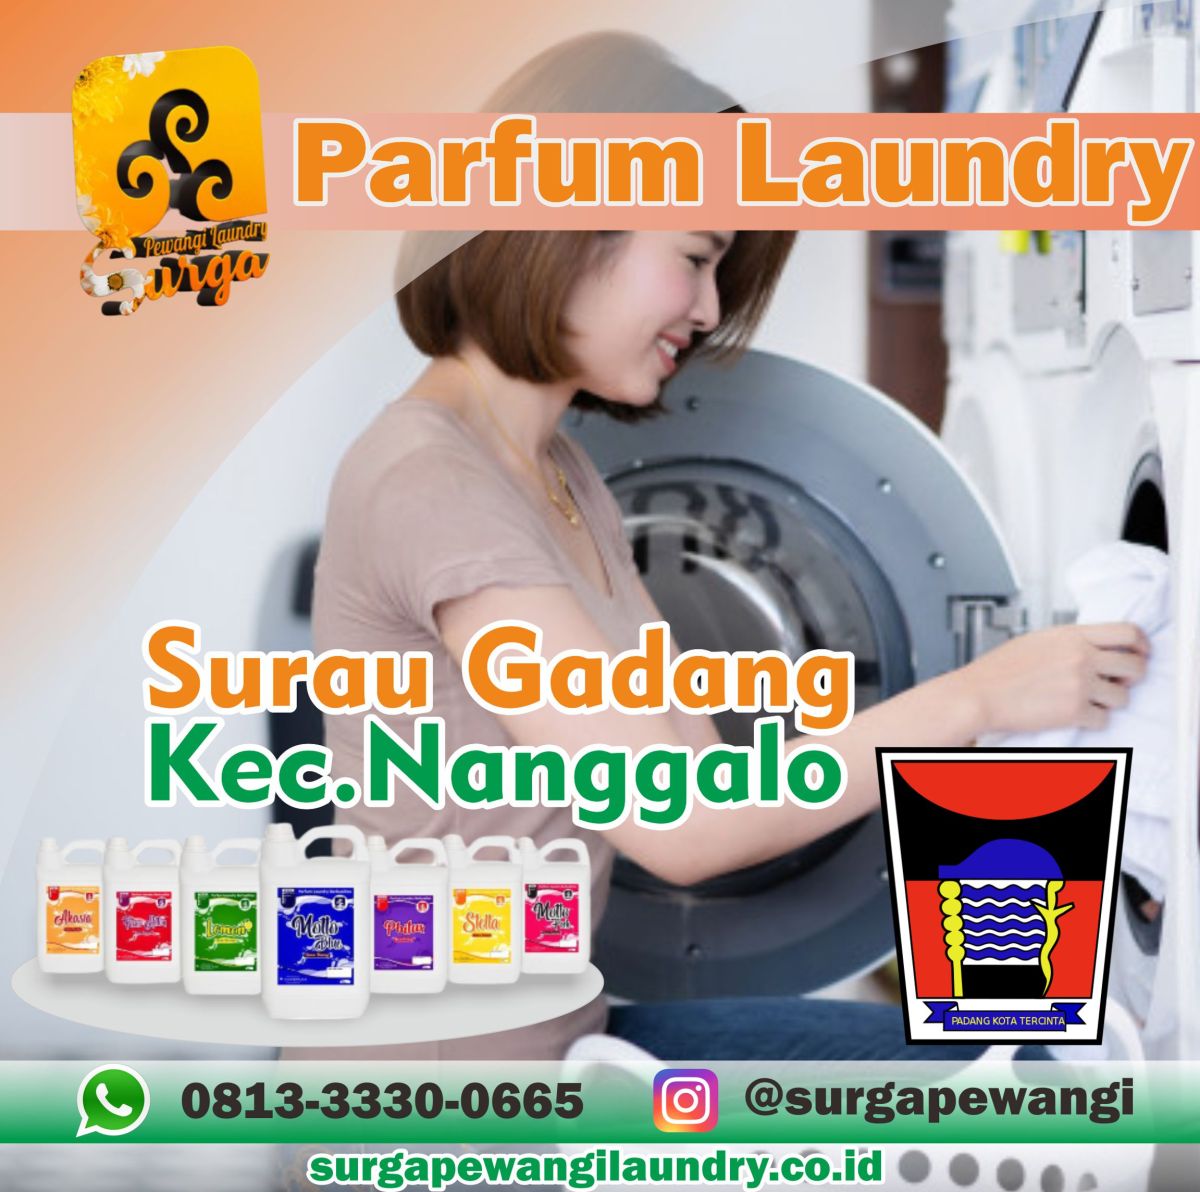 Parfum Laundry Tabing Banda Gadang, Nanggalo